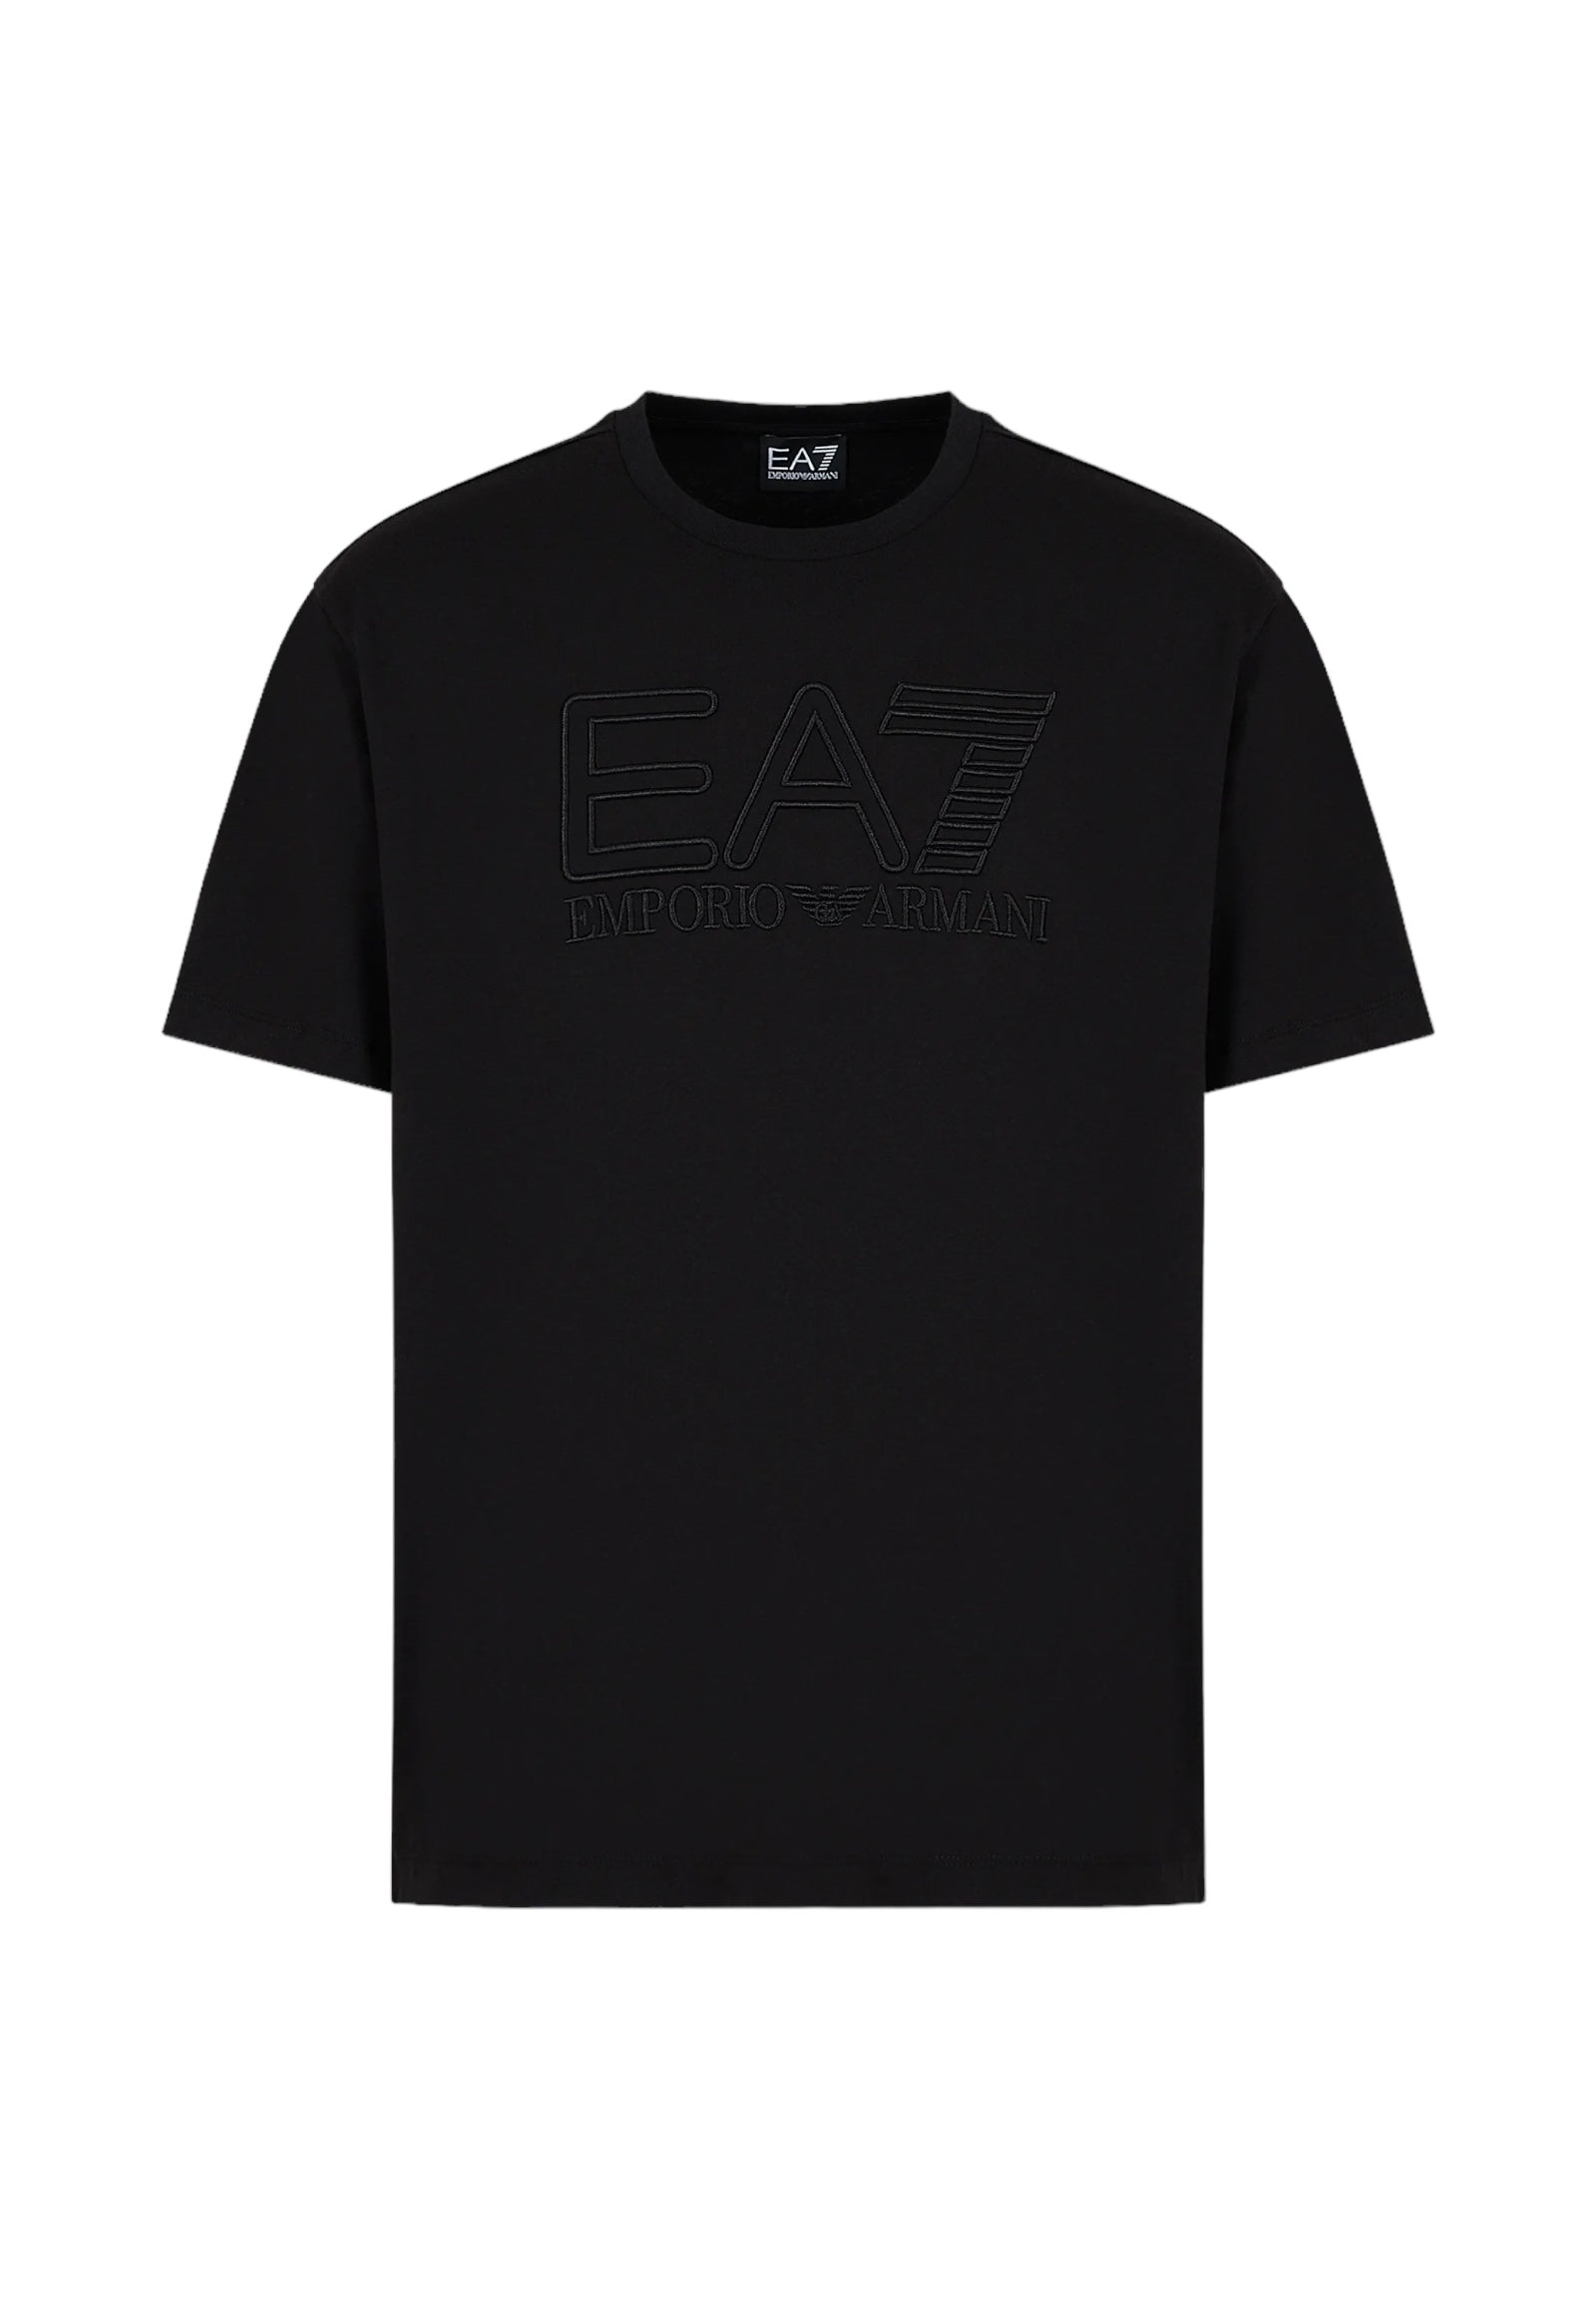 Ea7 Emporio Armani T-Shirt* 3dut05 Black